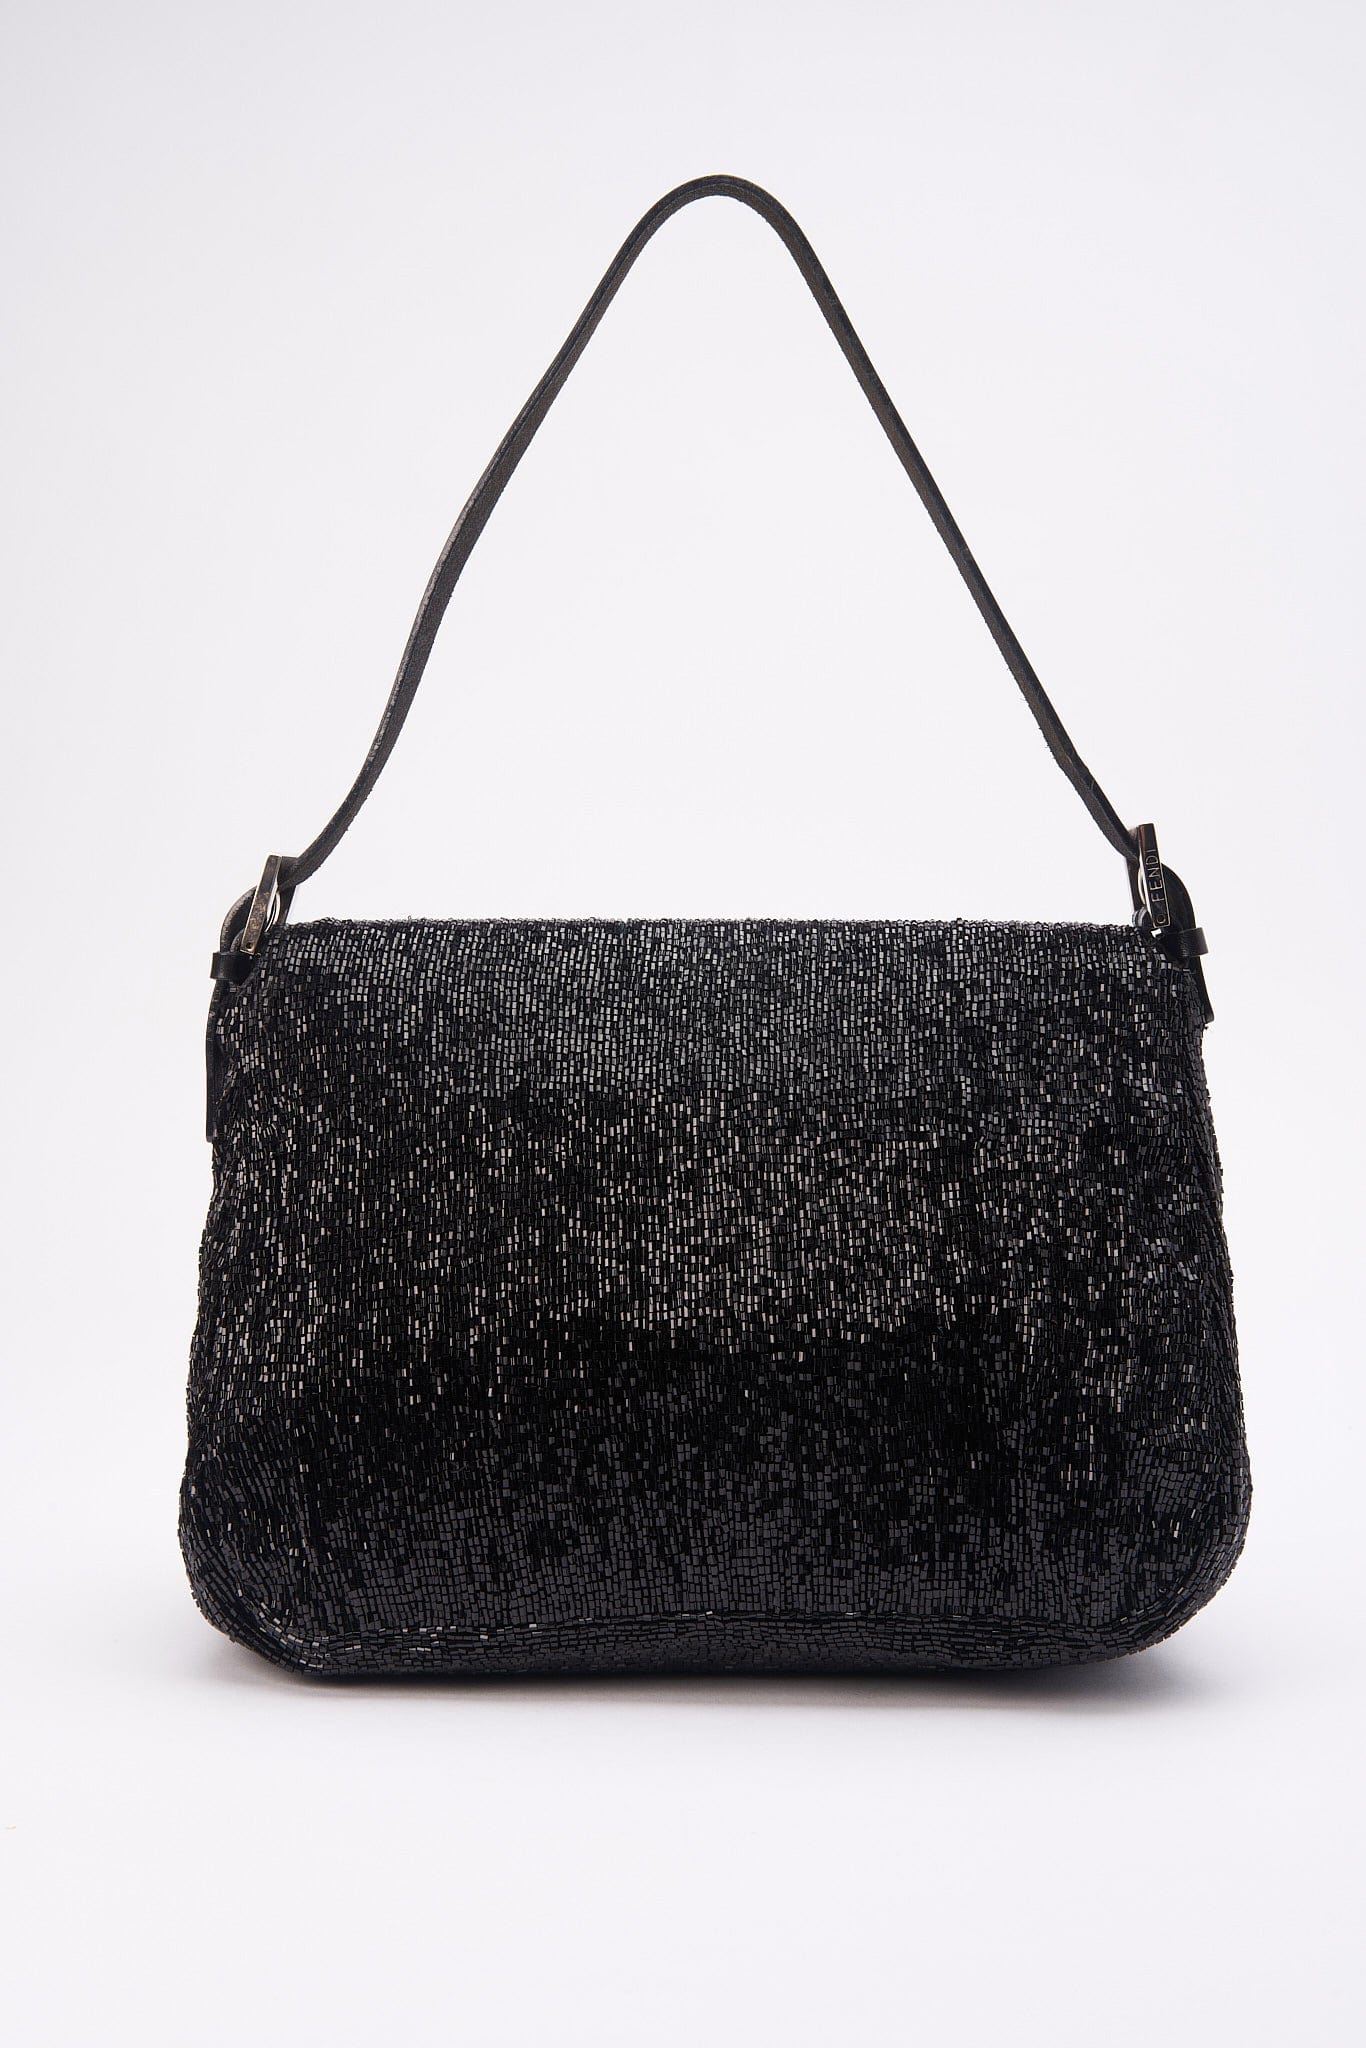 Fendi Black Sequin Beaded Mamma Baguette Bag